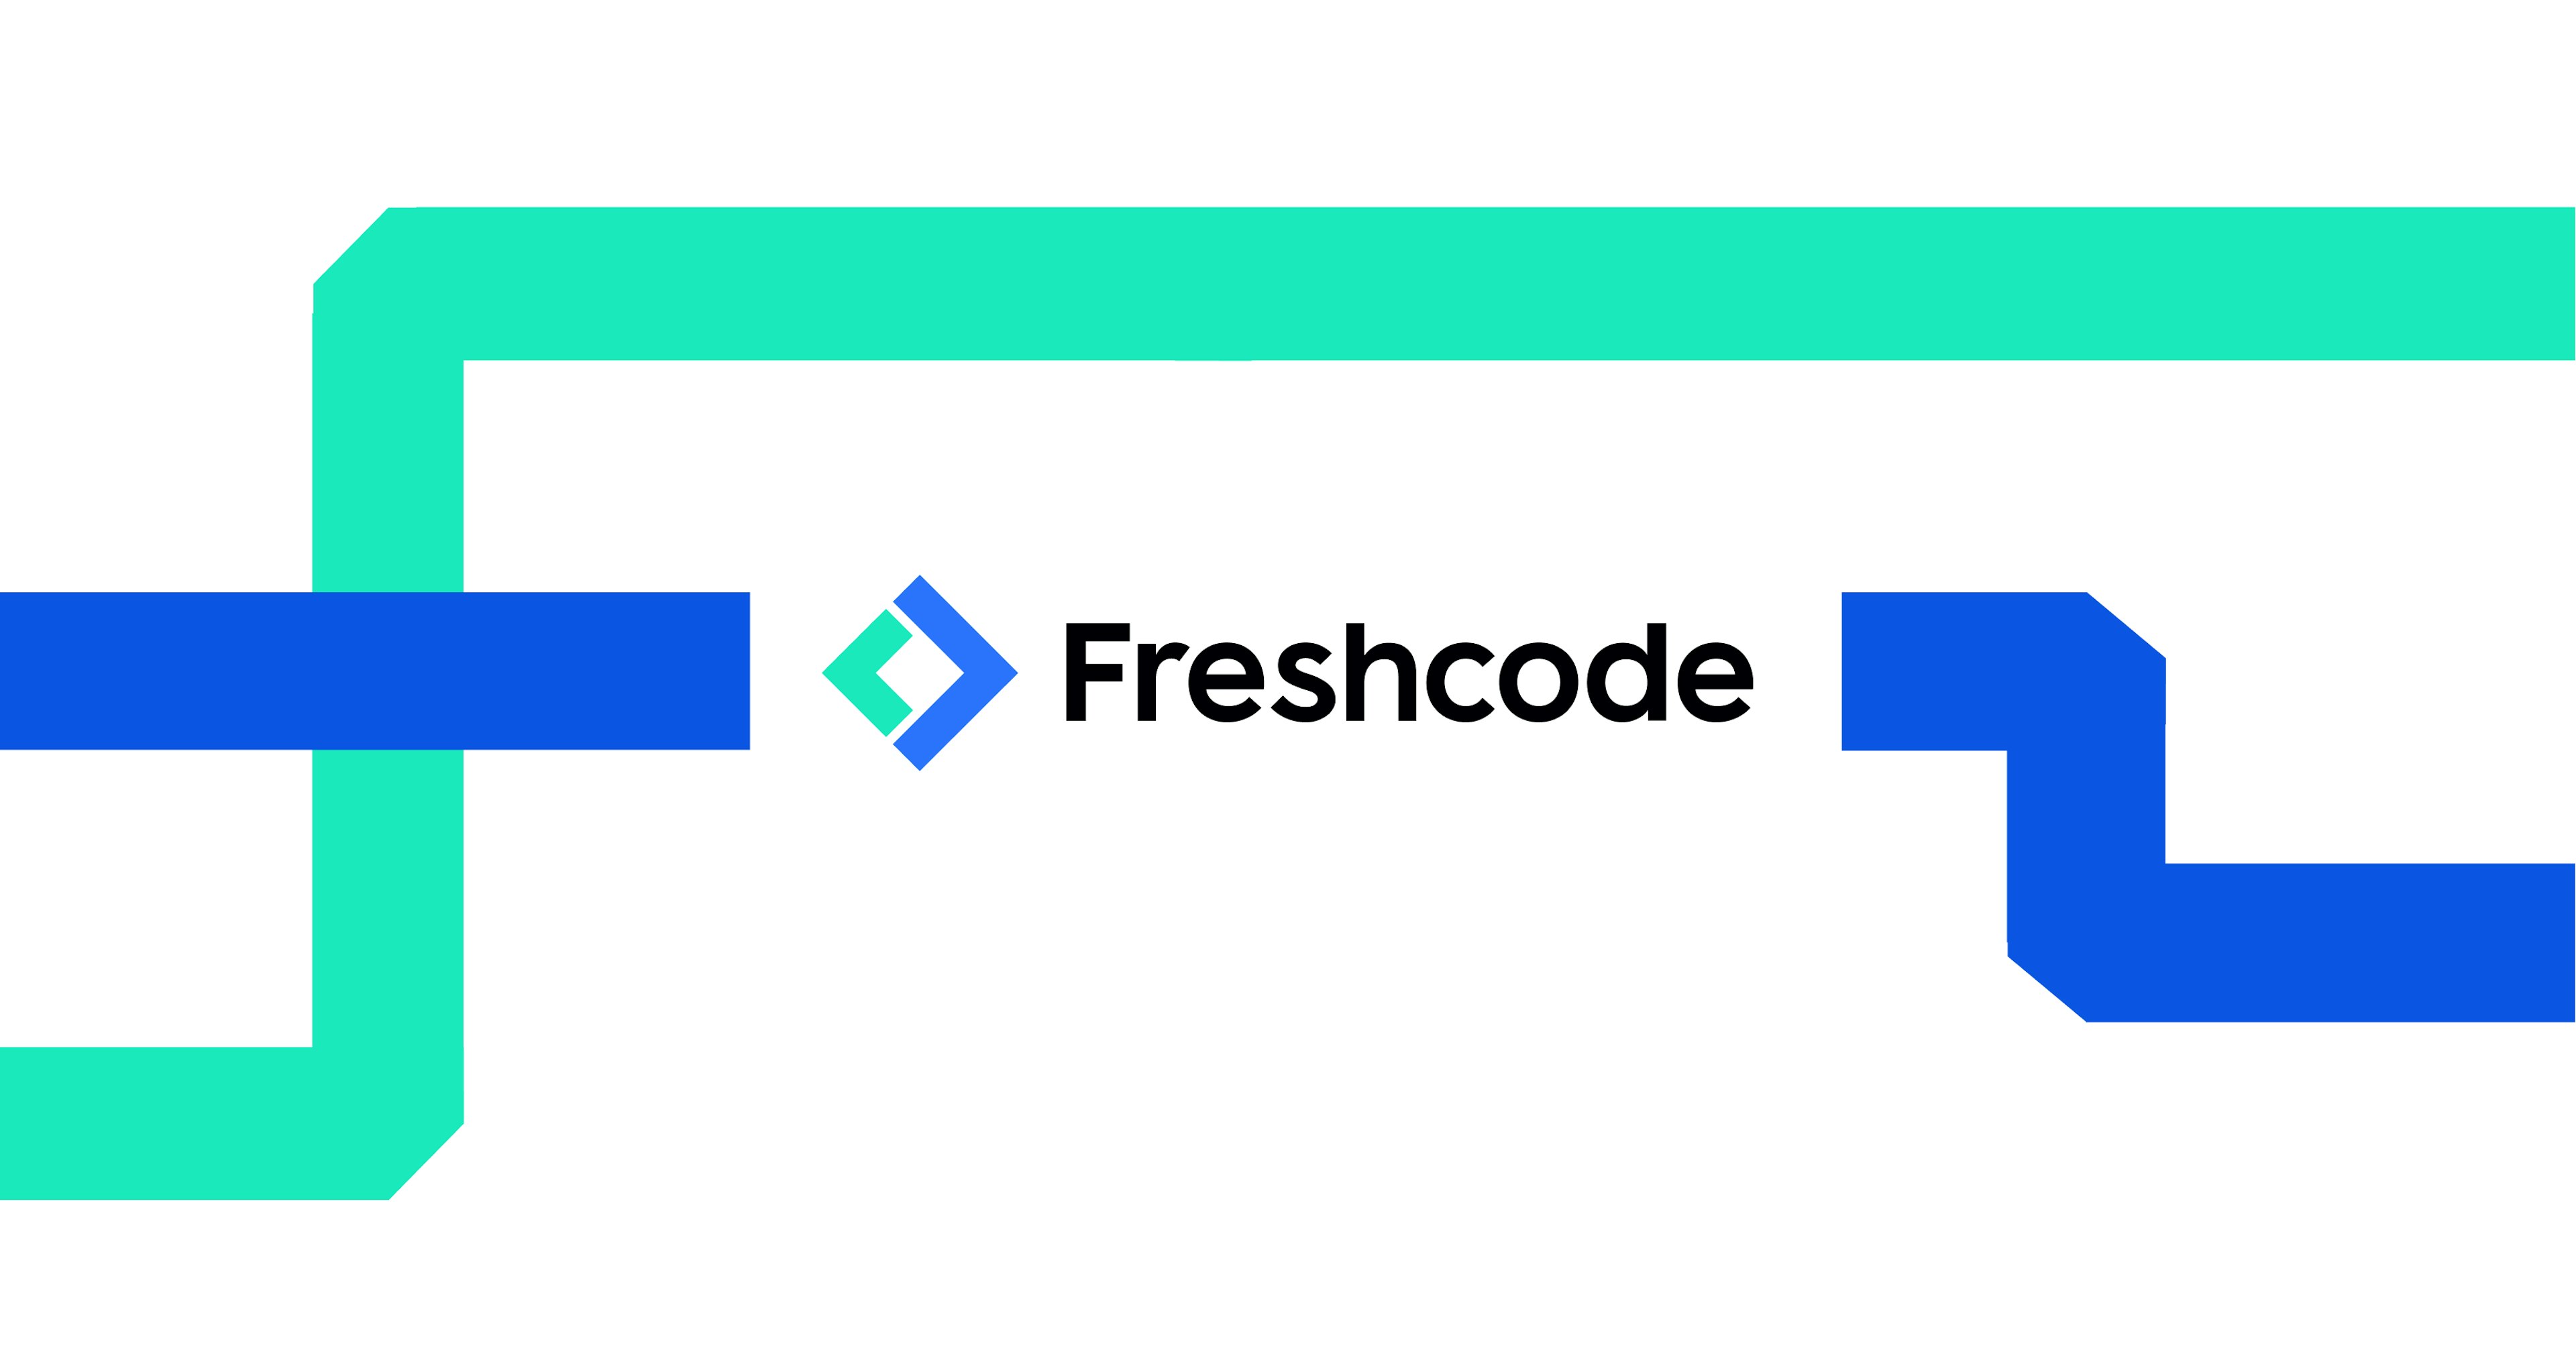 Freshcode Path: Clojure, JS, and Self-Development